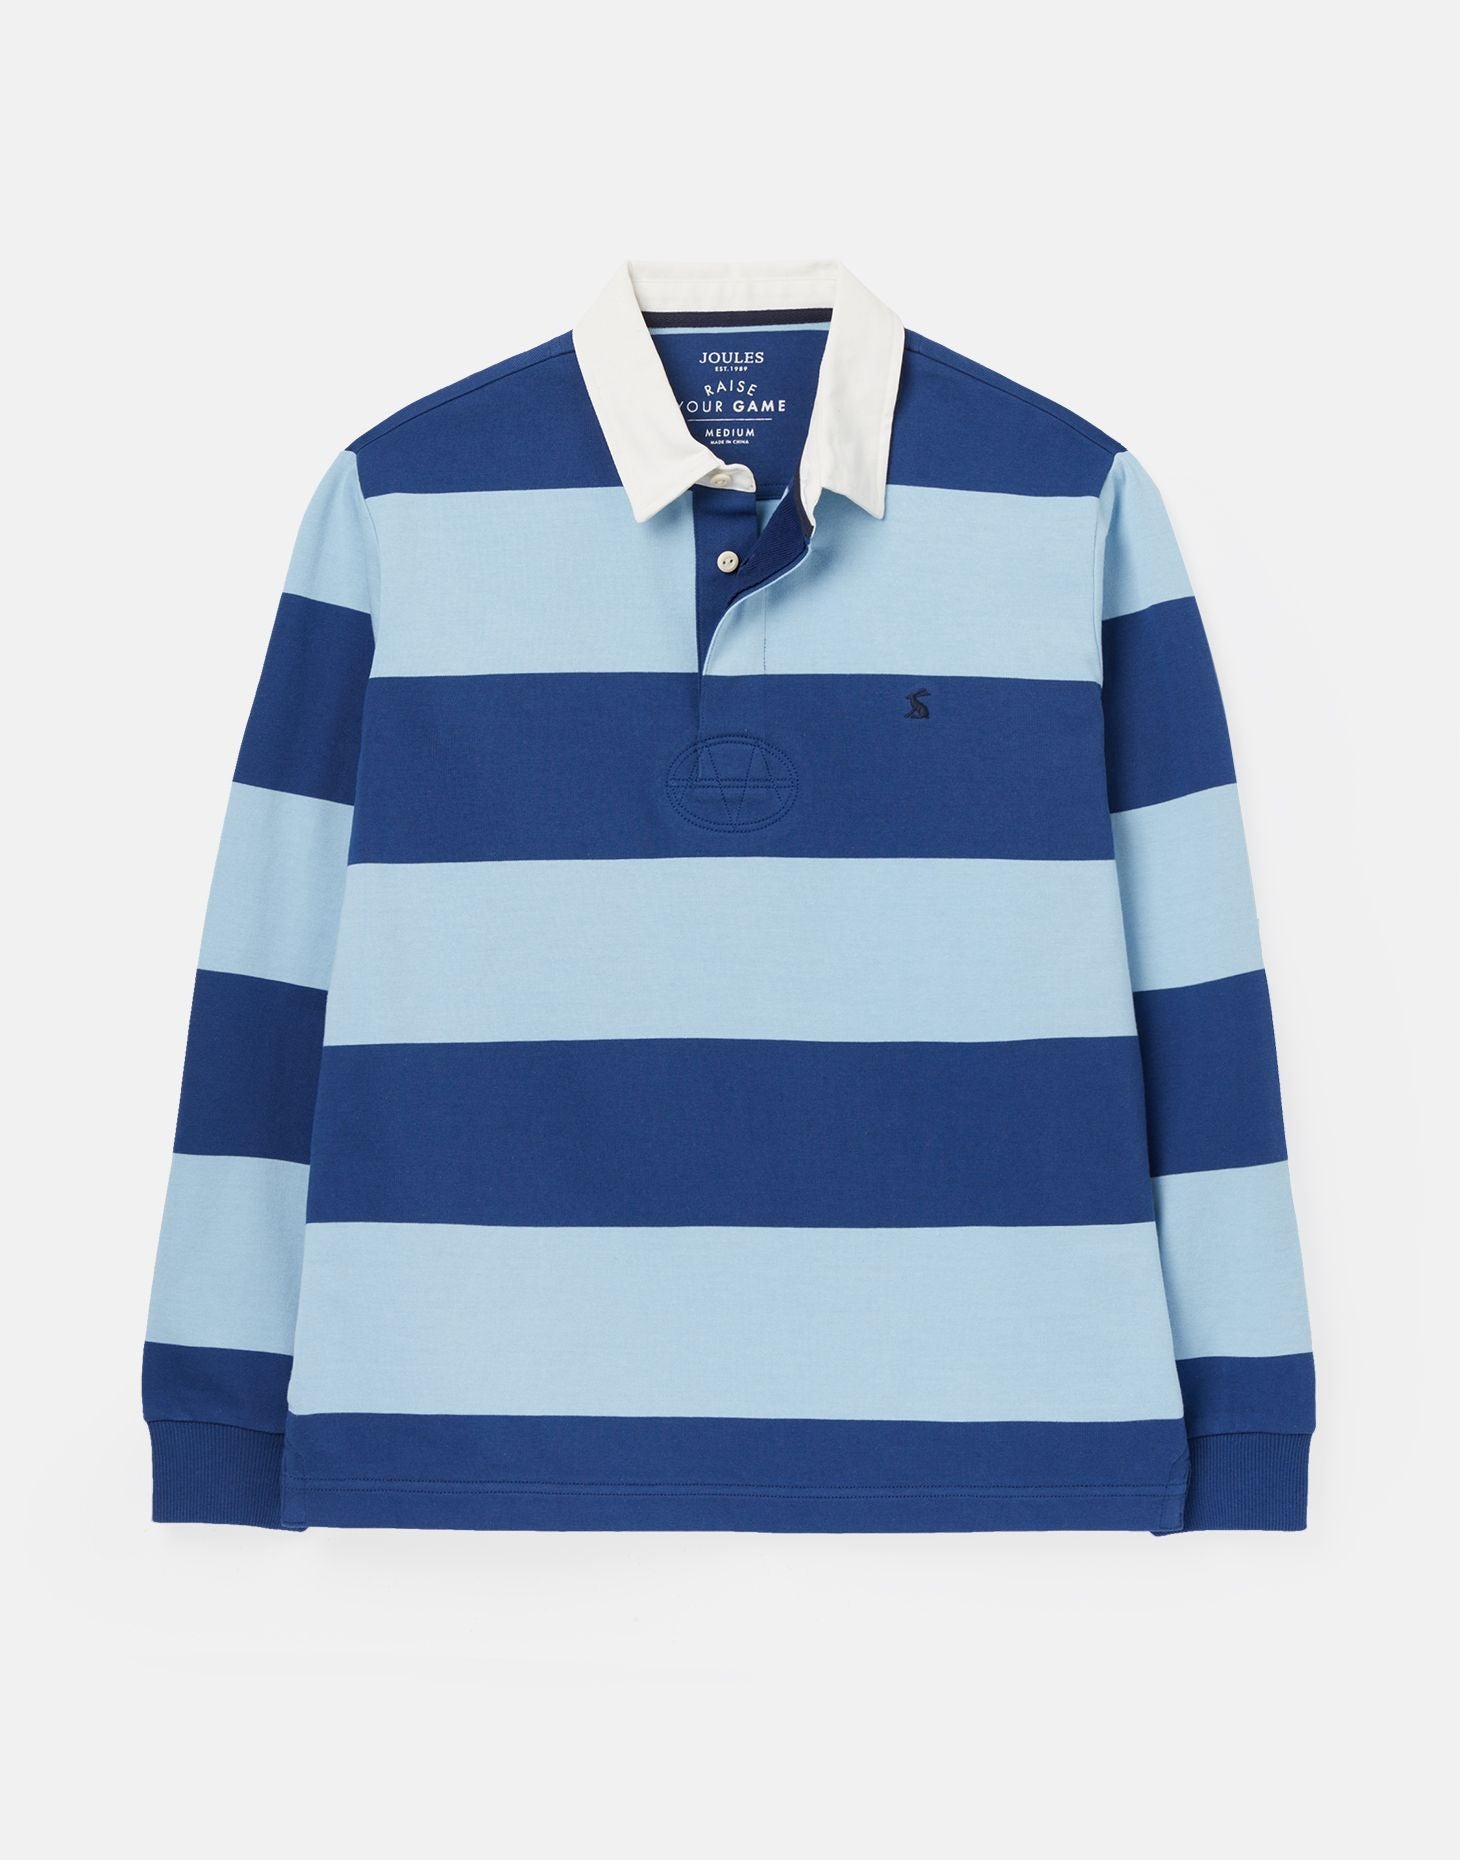 Onside Rugby Shirt - Blue Stripe